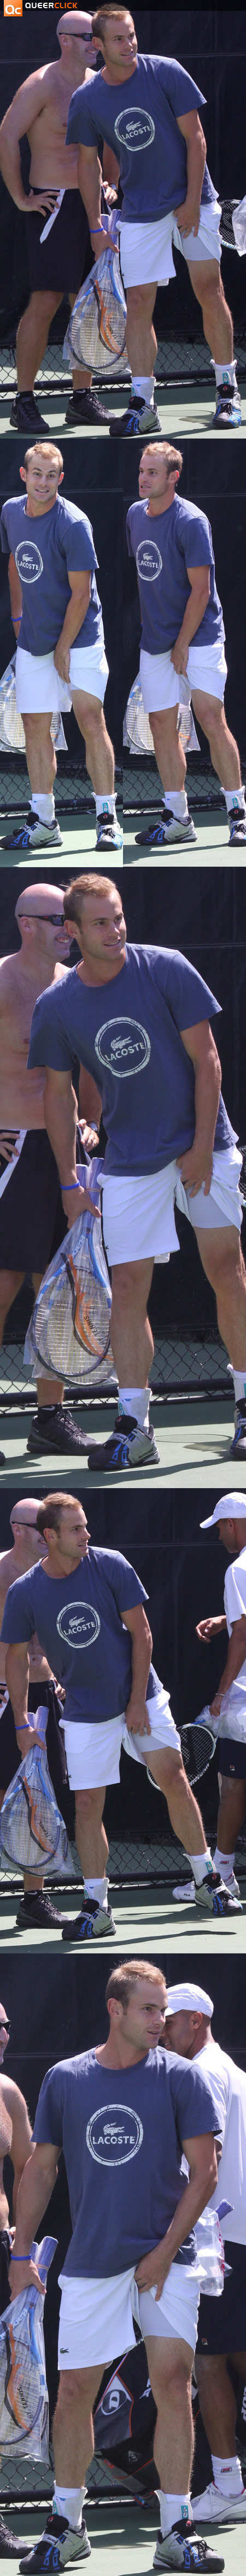 Andy Roddick's Balls Itch